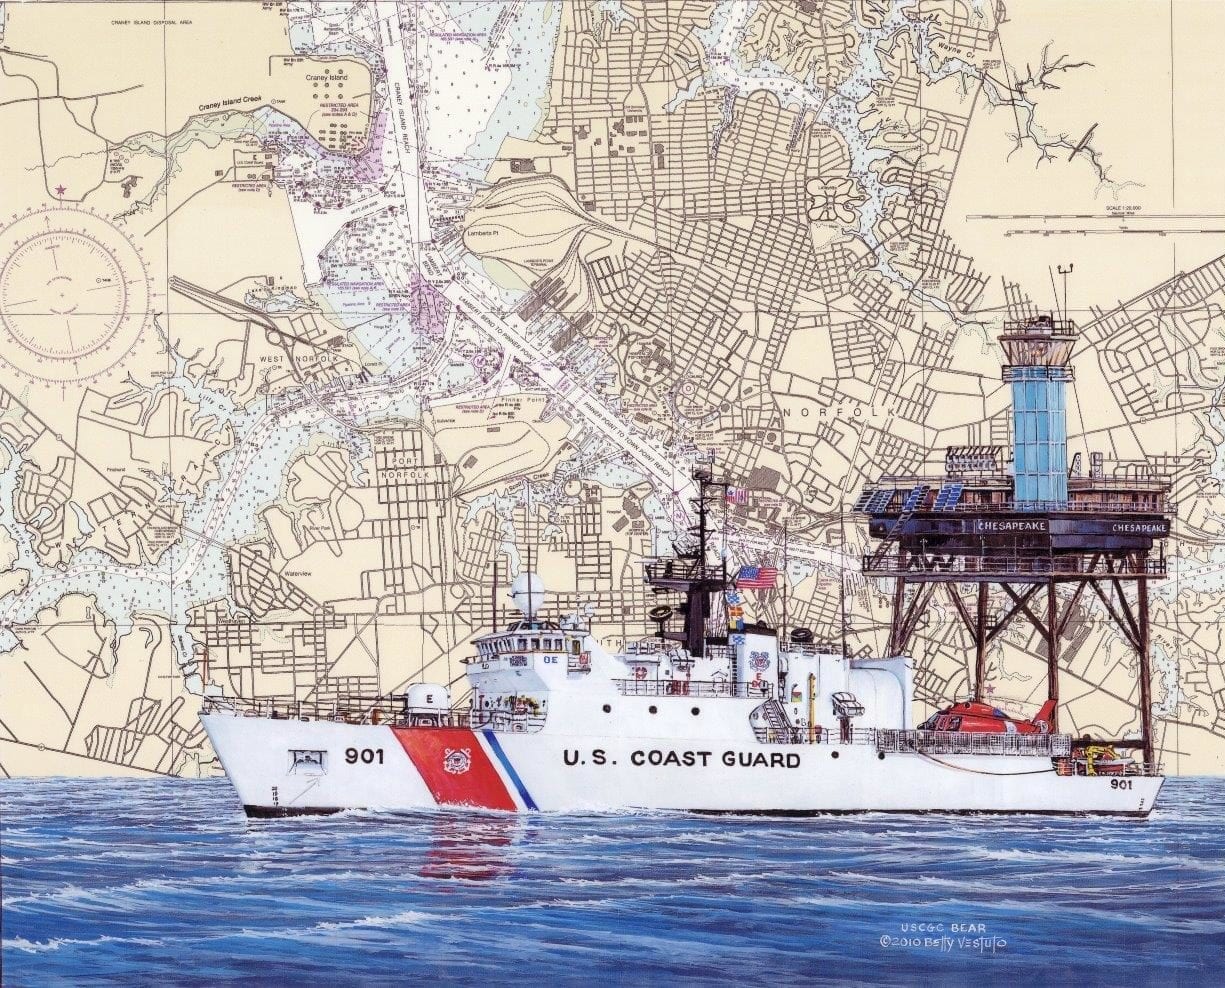 USCGC BEAR (WMEC 901)